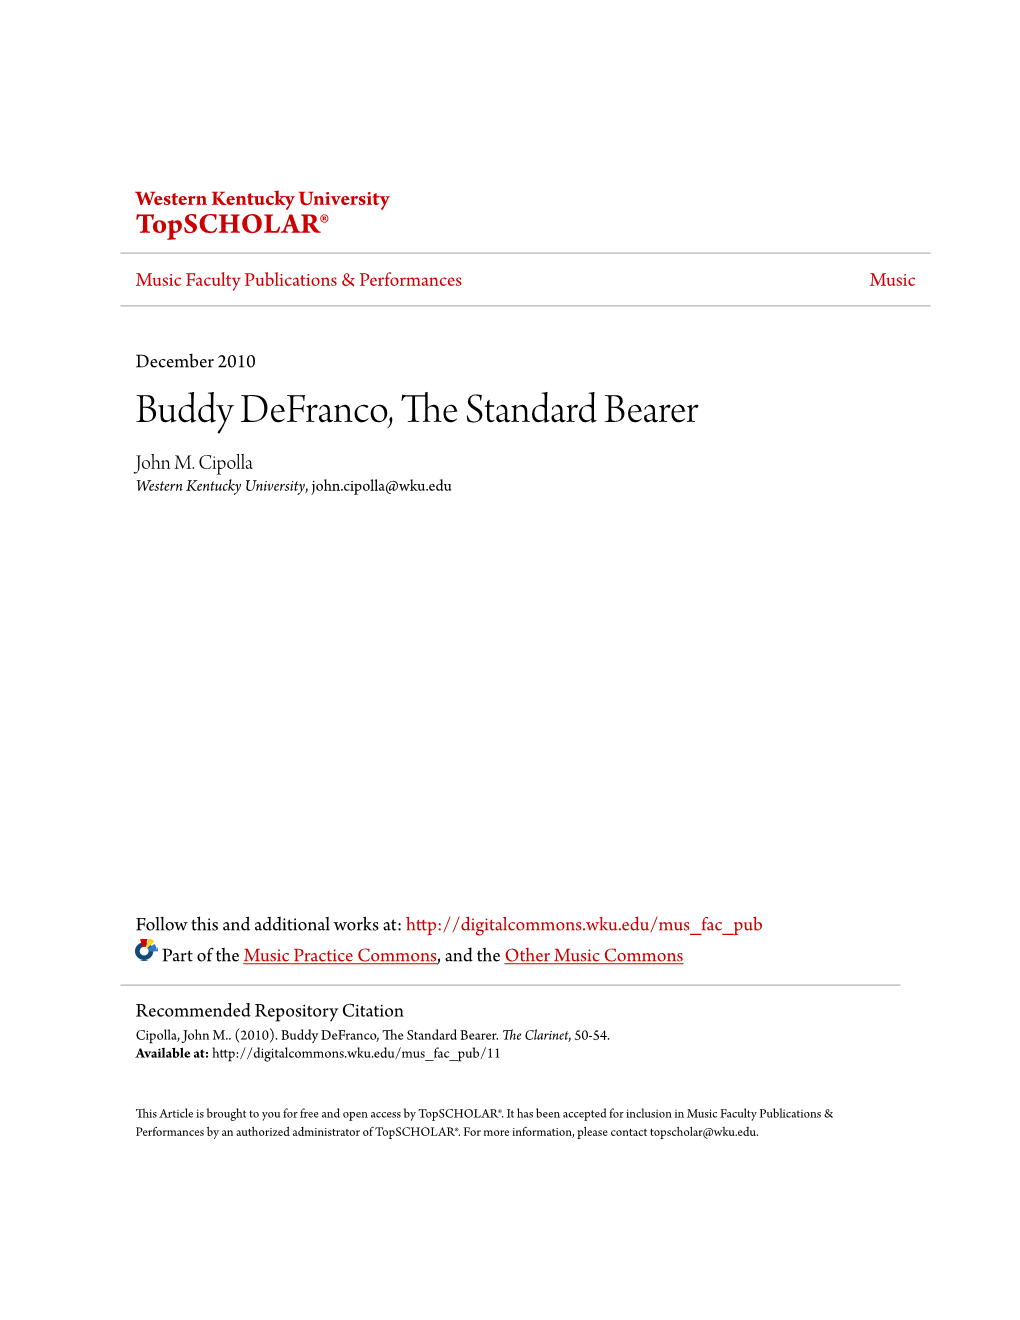 Buddy Defranco, the Standard Bearer